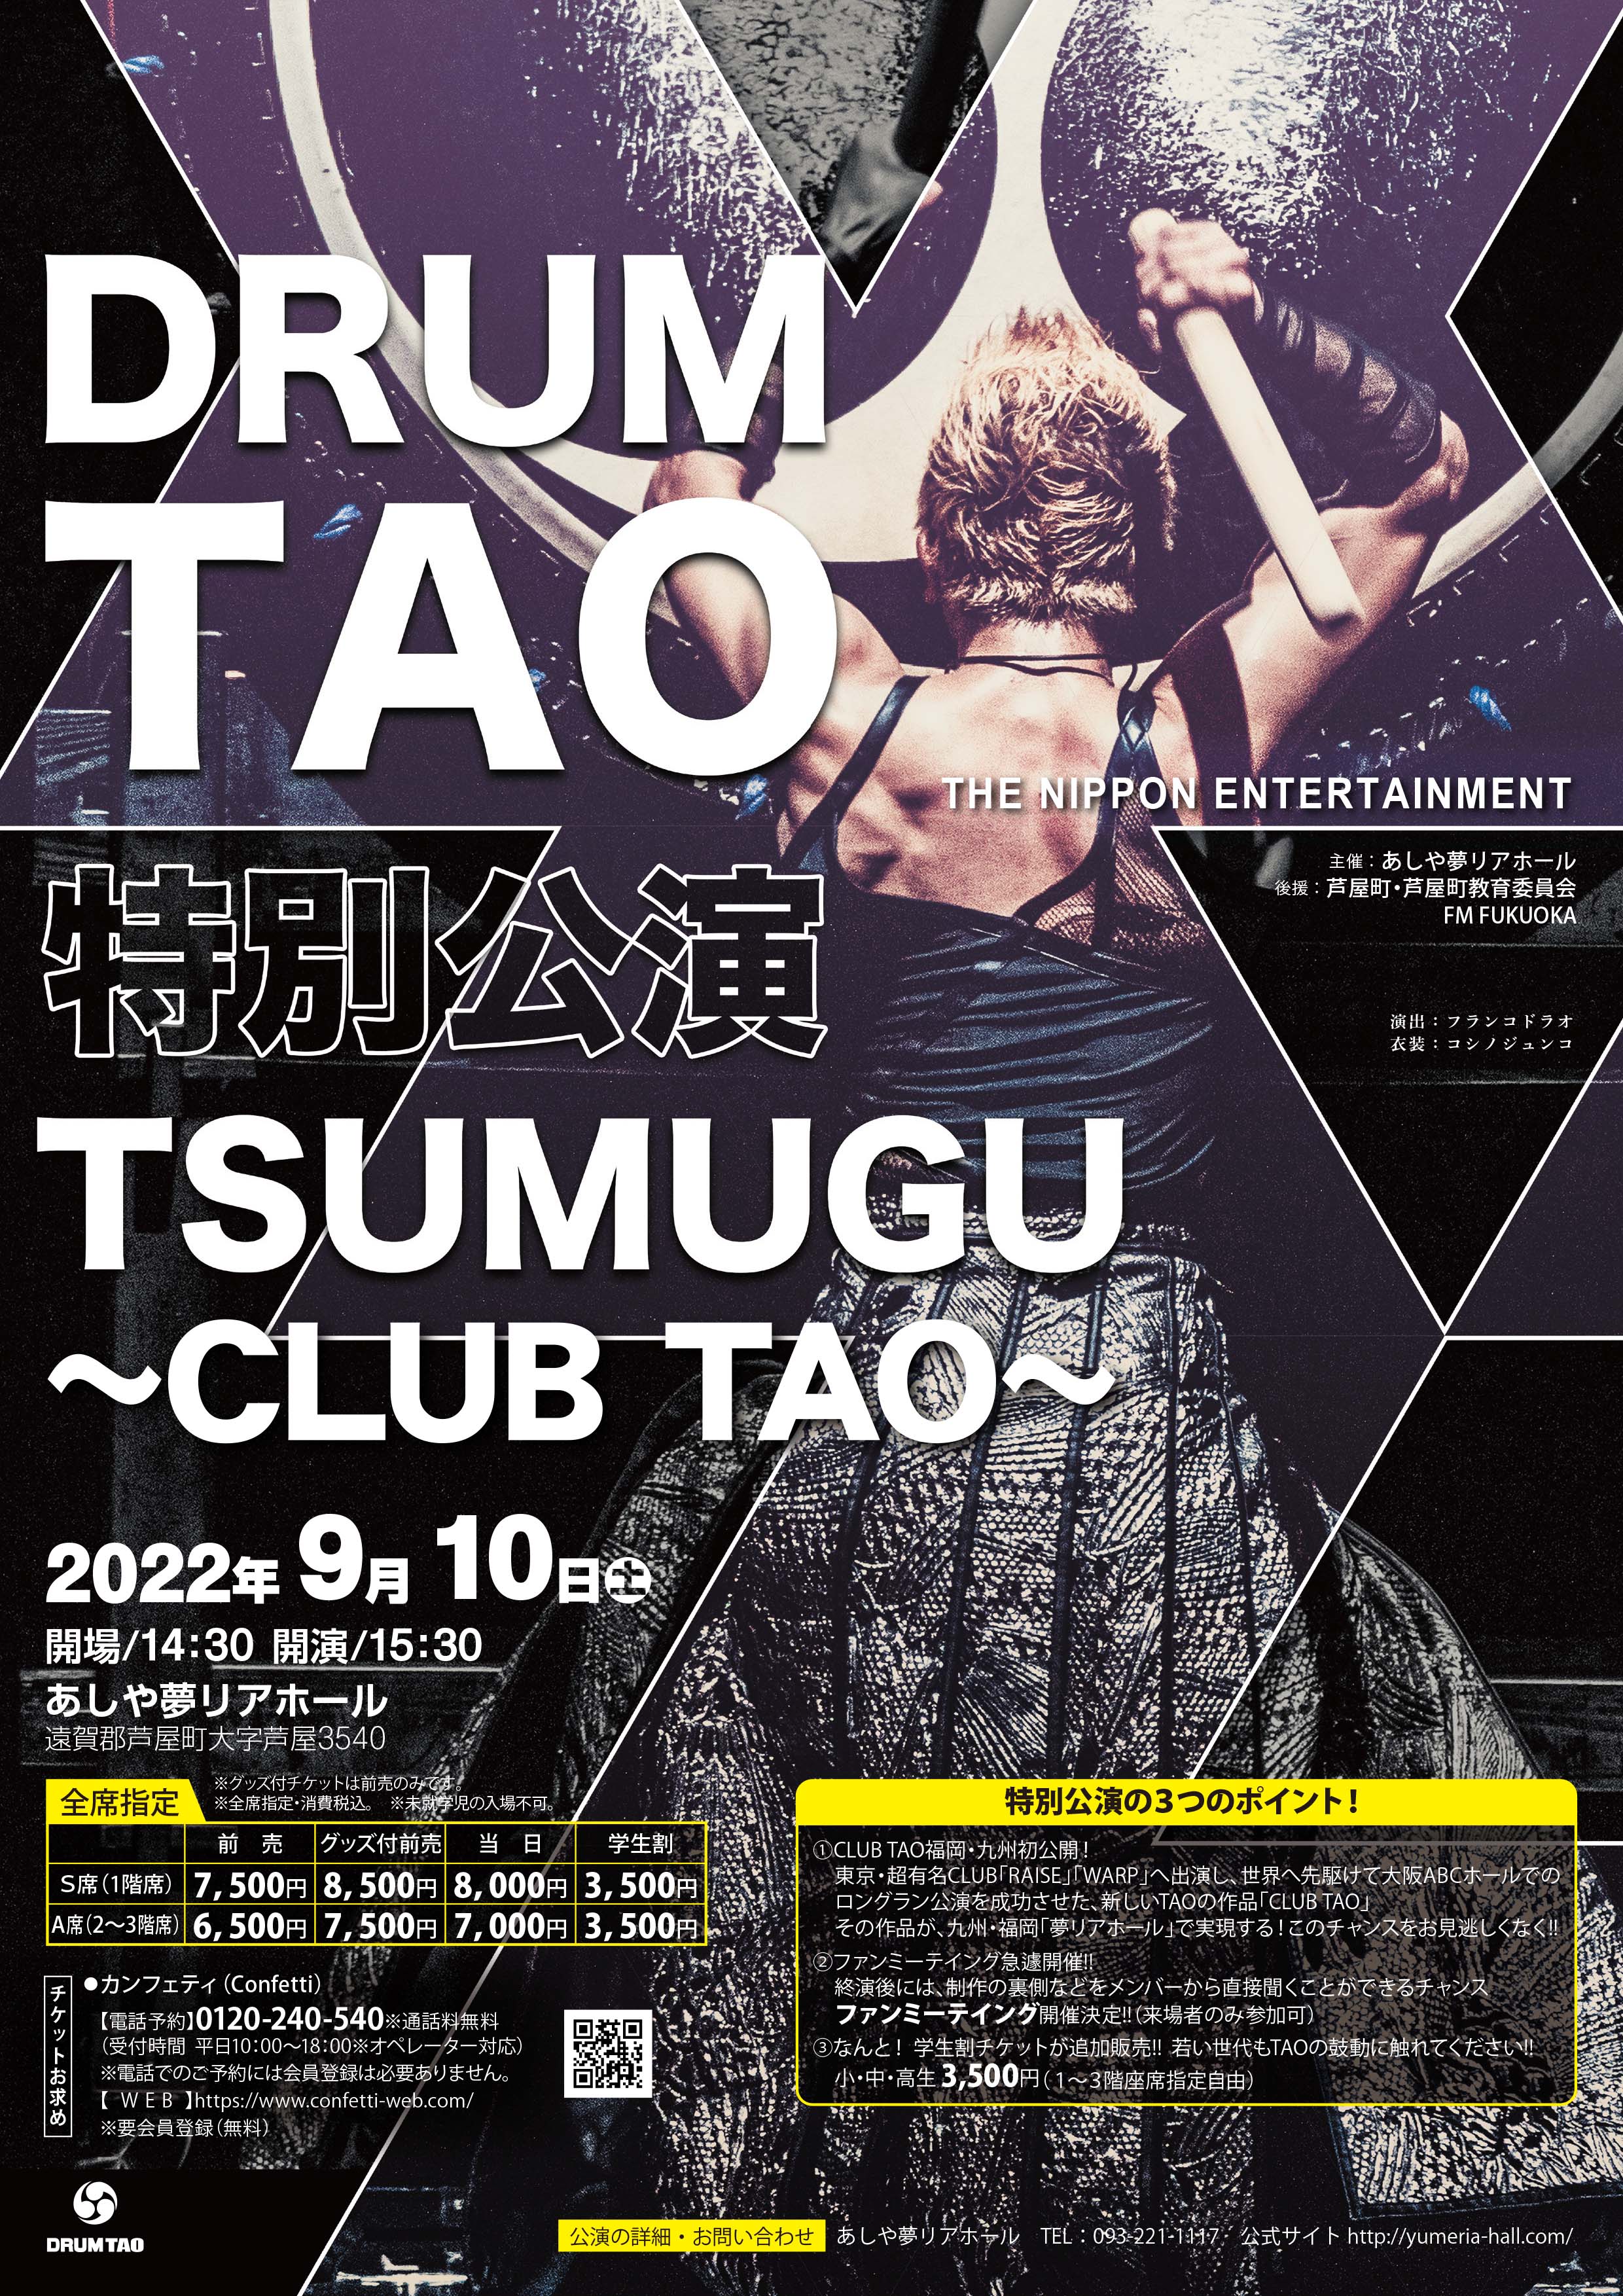 DRUM TAO 特別公演「TSUMUGU